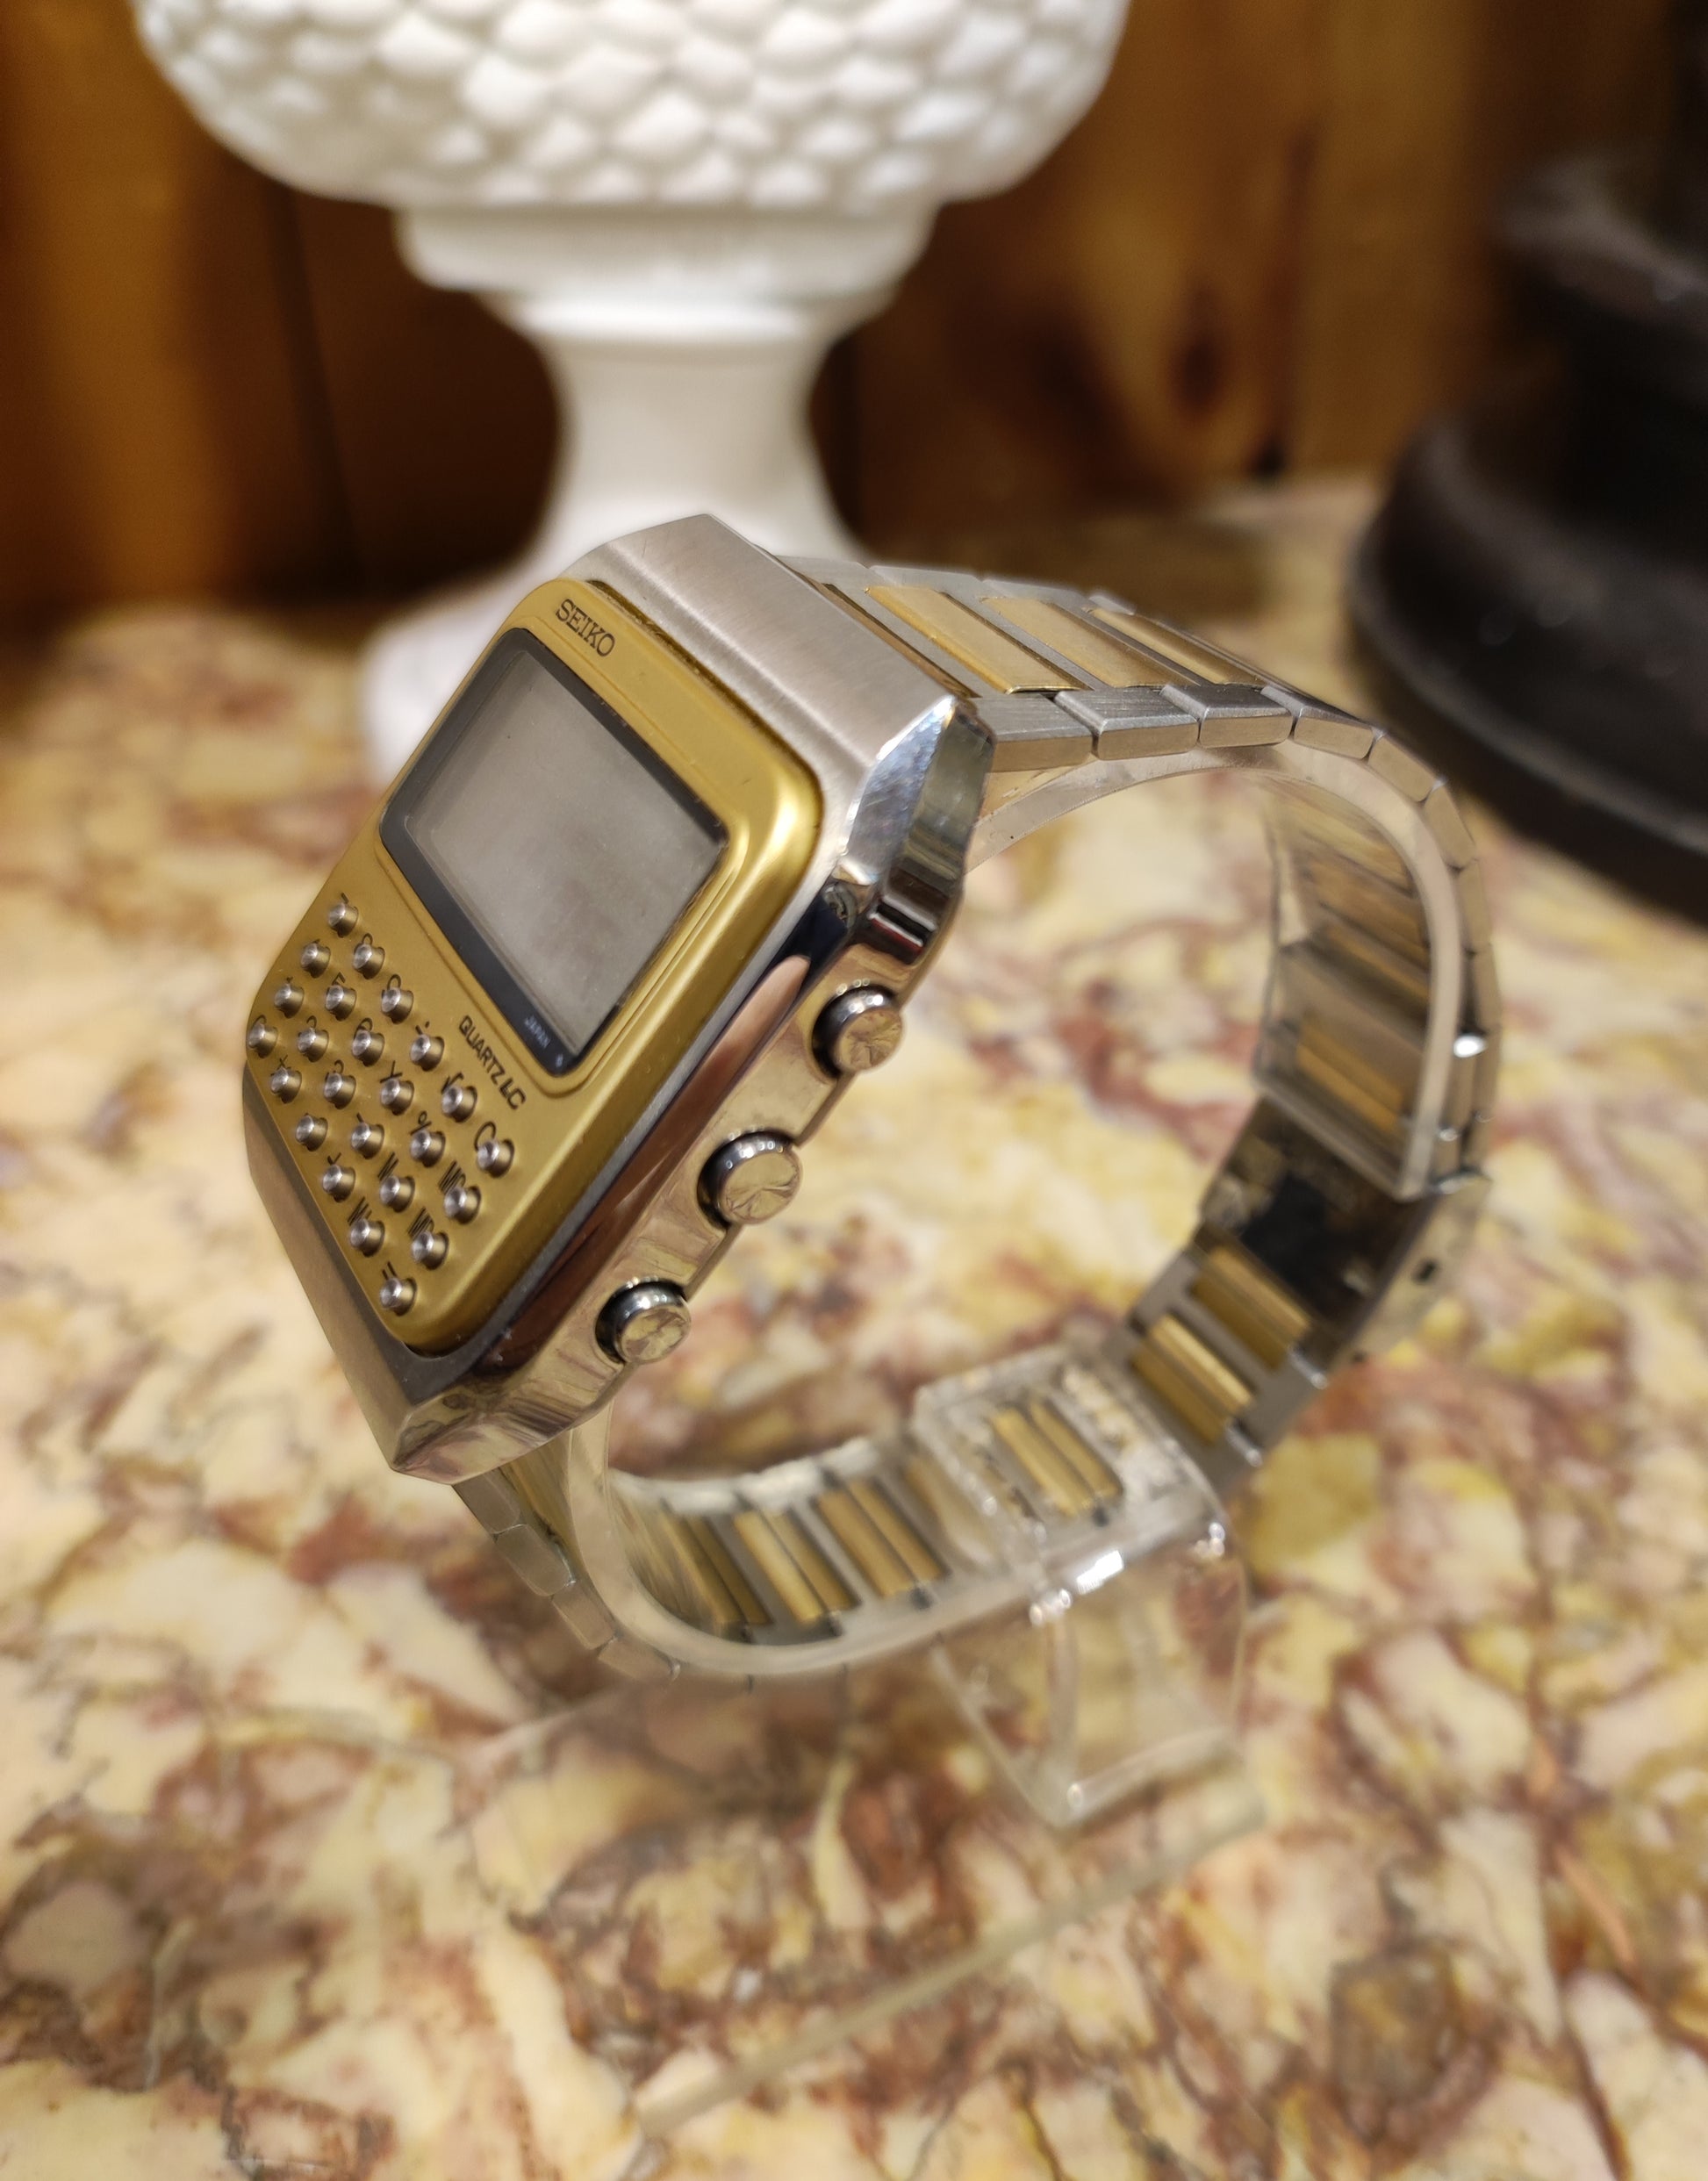 Reloj de pulsera Seiko C153-5007 con calculadora y lápiz táctil – Jorge  Mashini - Antigüedades